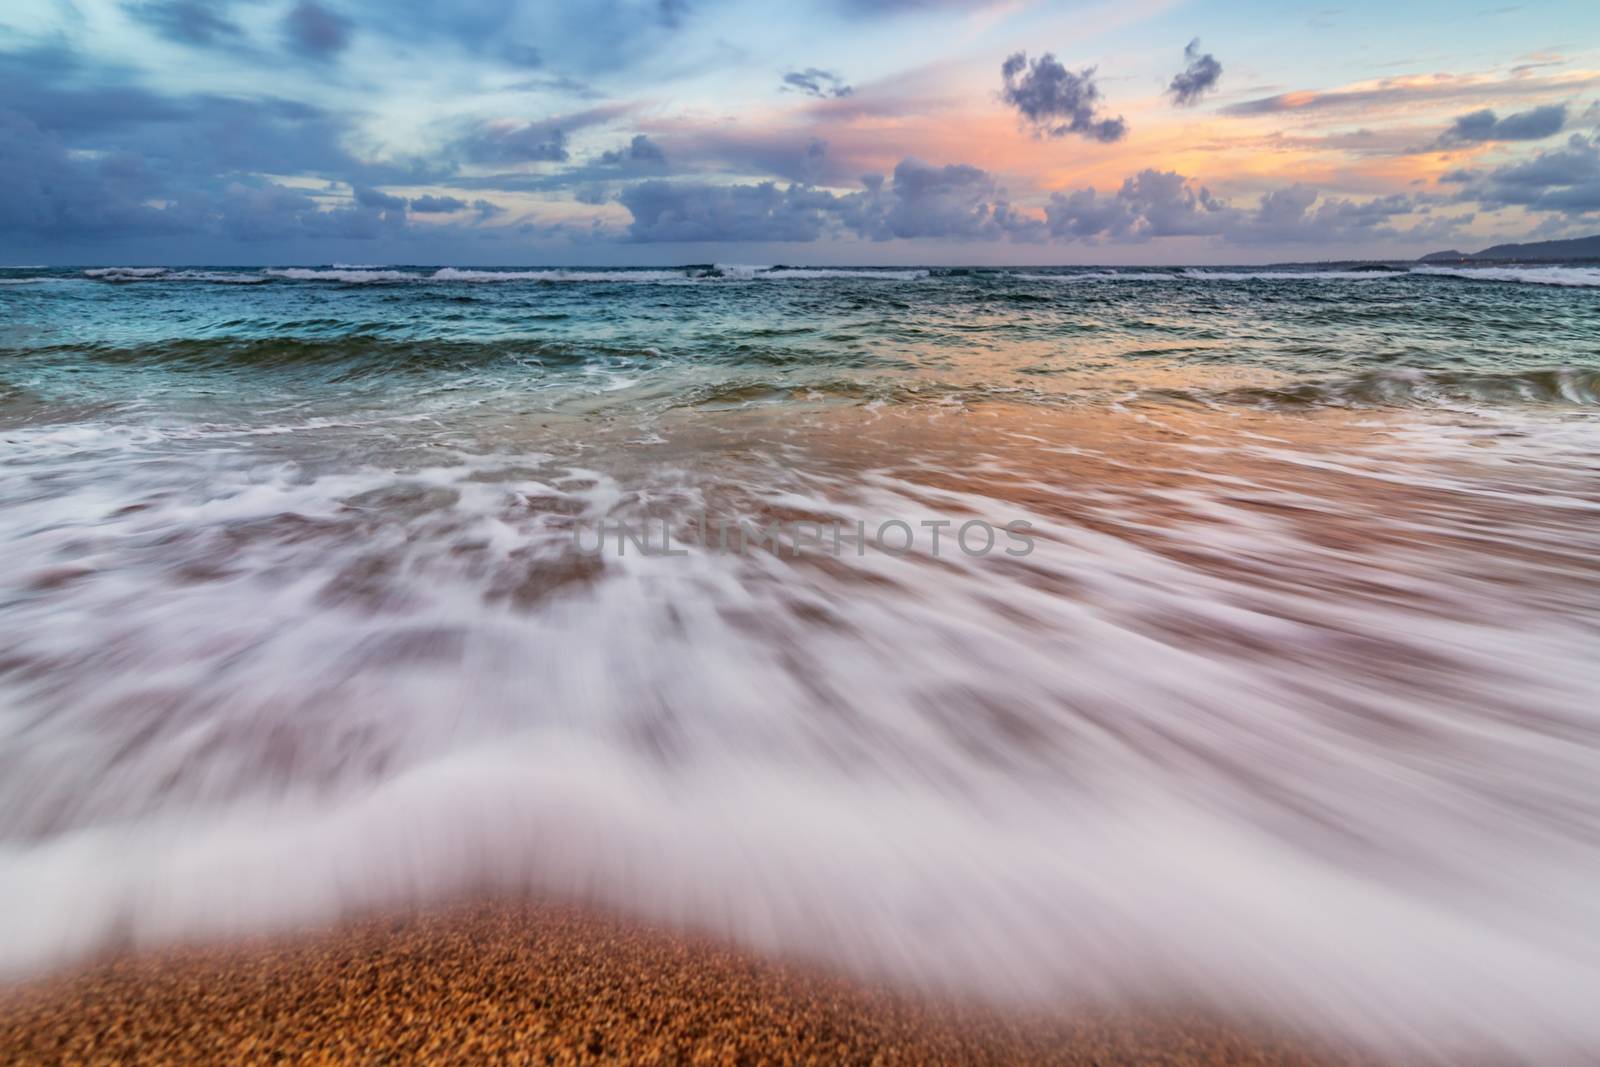 Kauai Hawaii Sunset at the Beach by backyard_photography